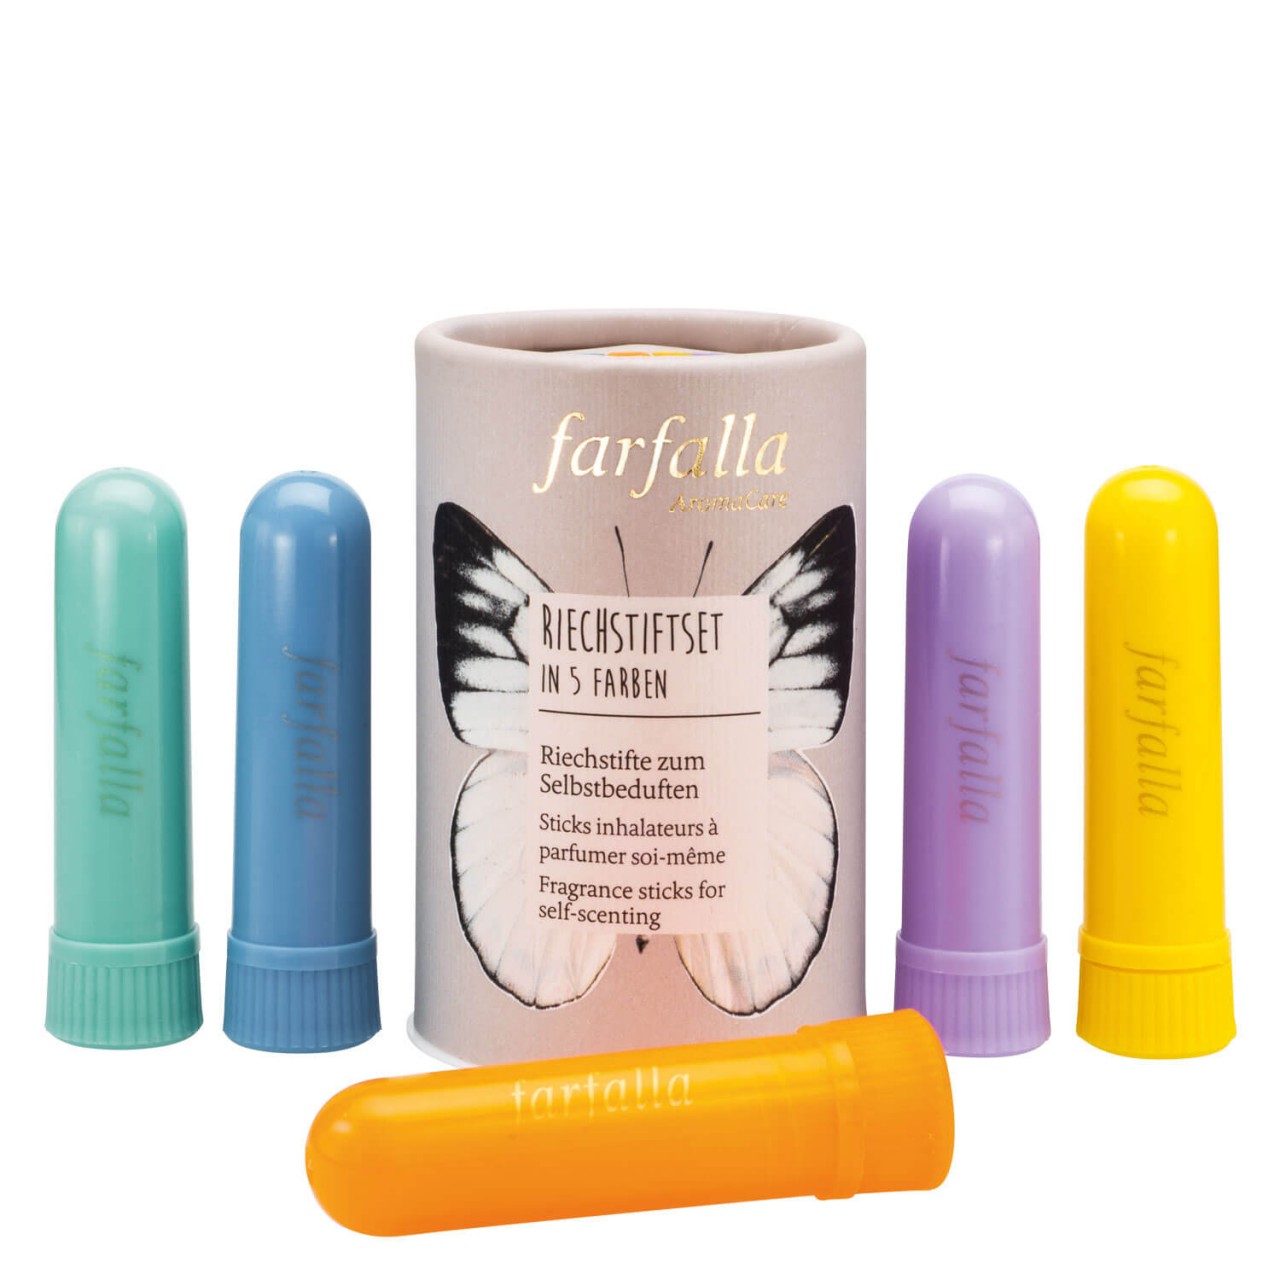 Farfalla Tools - Riechstiftset in 5 Farben von Farfalla